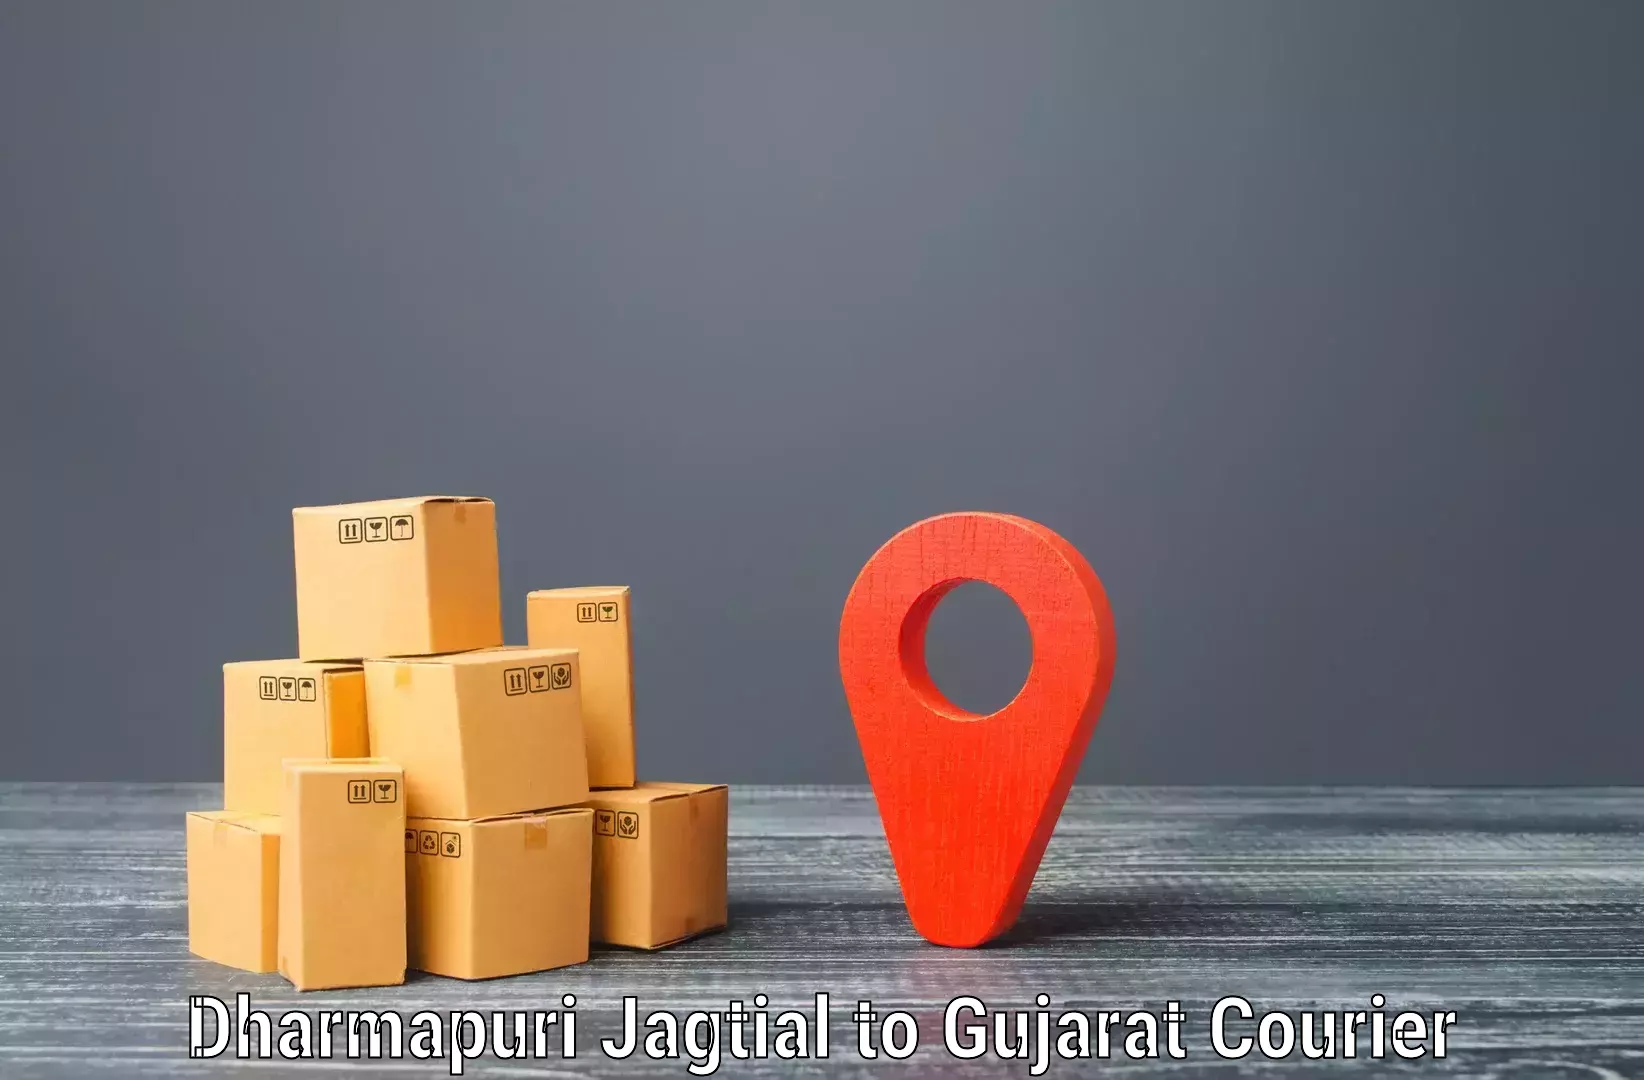 Smart courier technologies Dharmapuri Jagtial to Patan